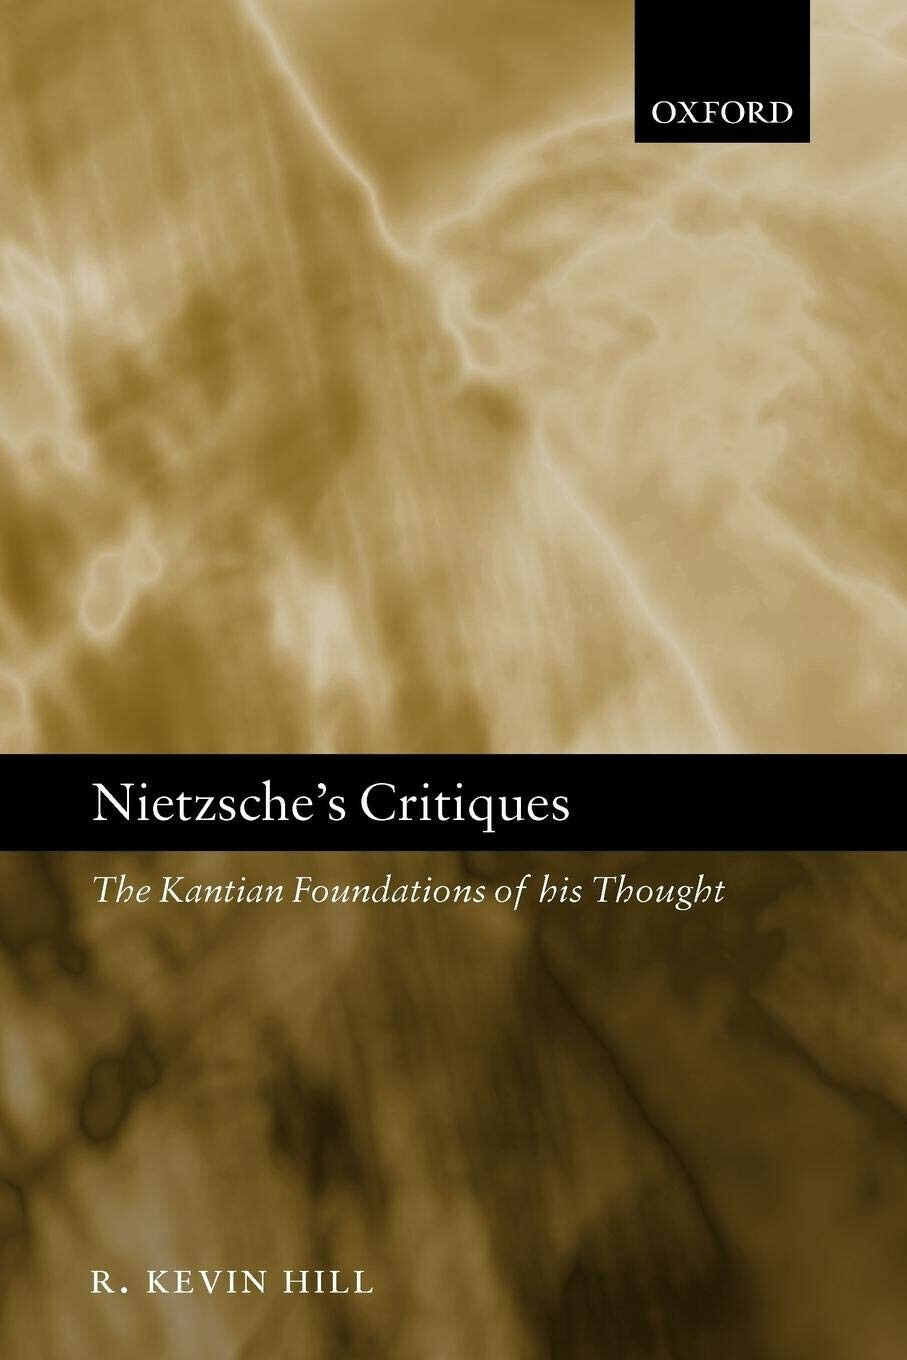 Nietzsche s Critiques - R. Kevin Hill - Oxford, 2005